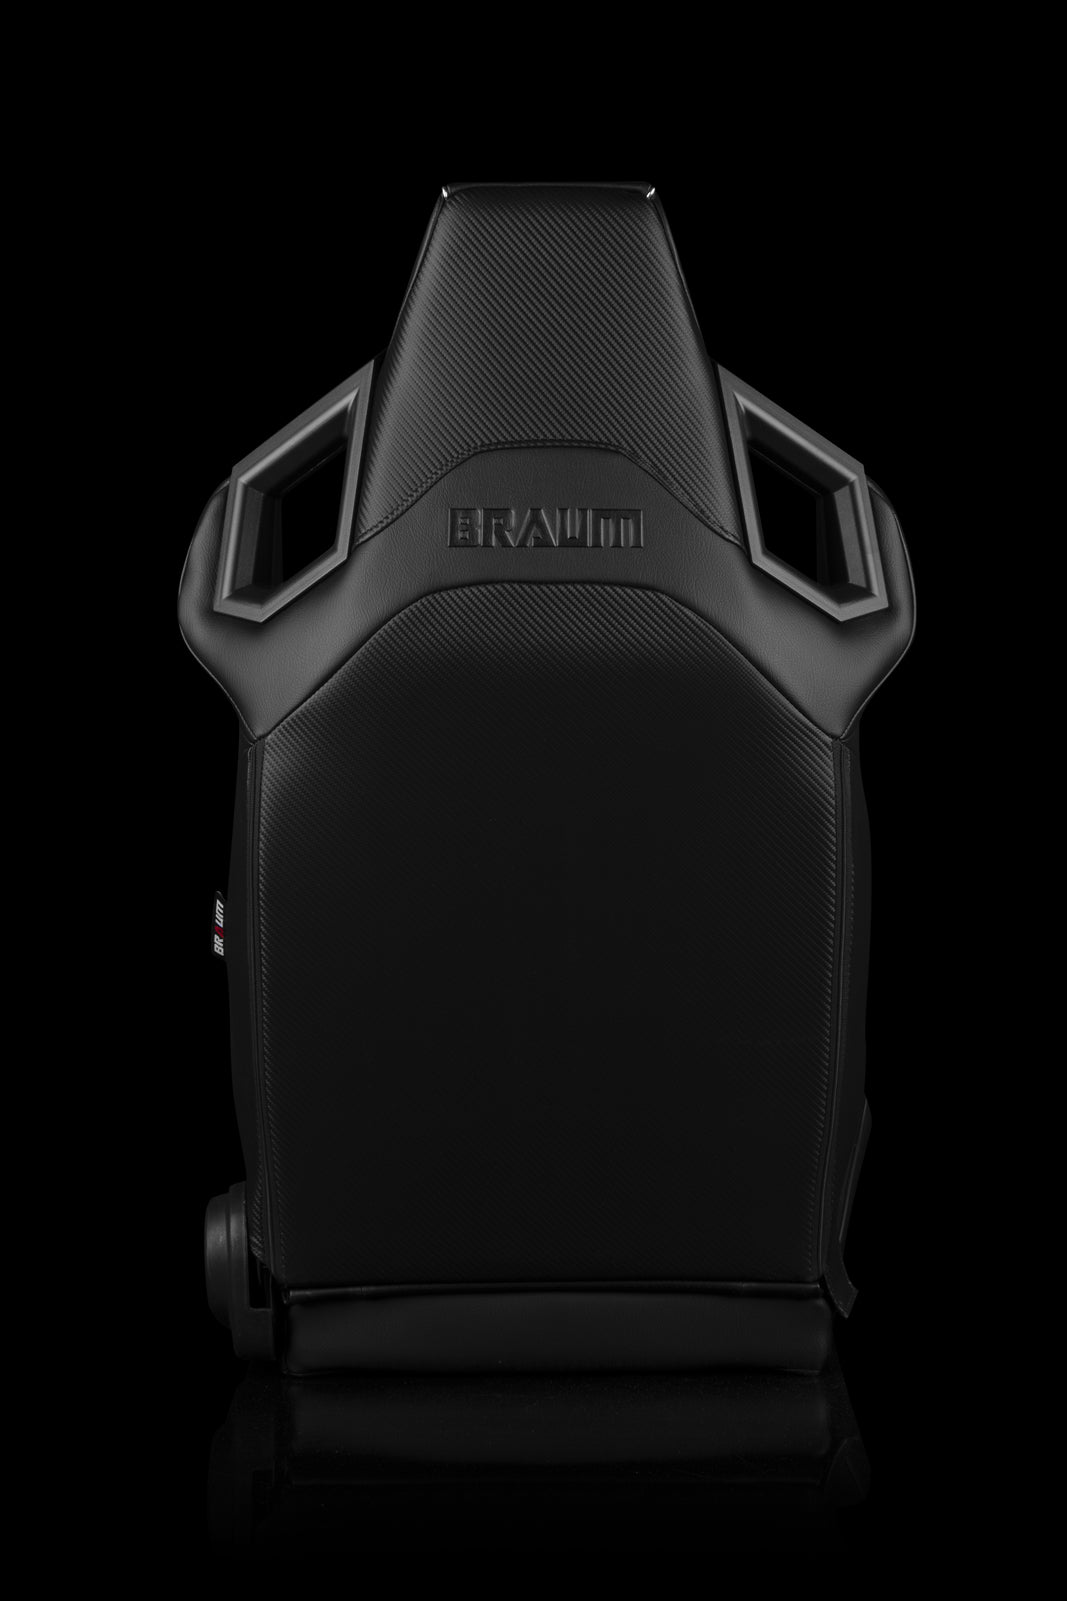 Universal BRAUM ALPHA-X SERIES RACING SEATS (BLACK CLOTH) – PAIR